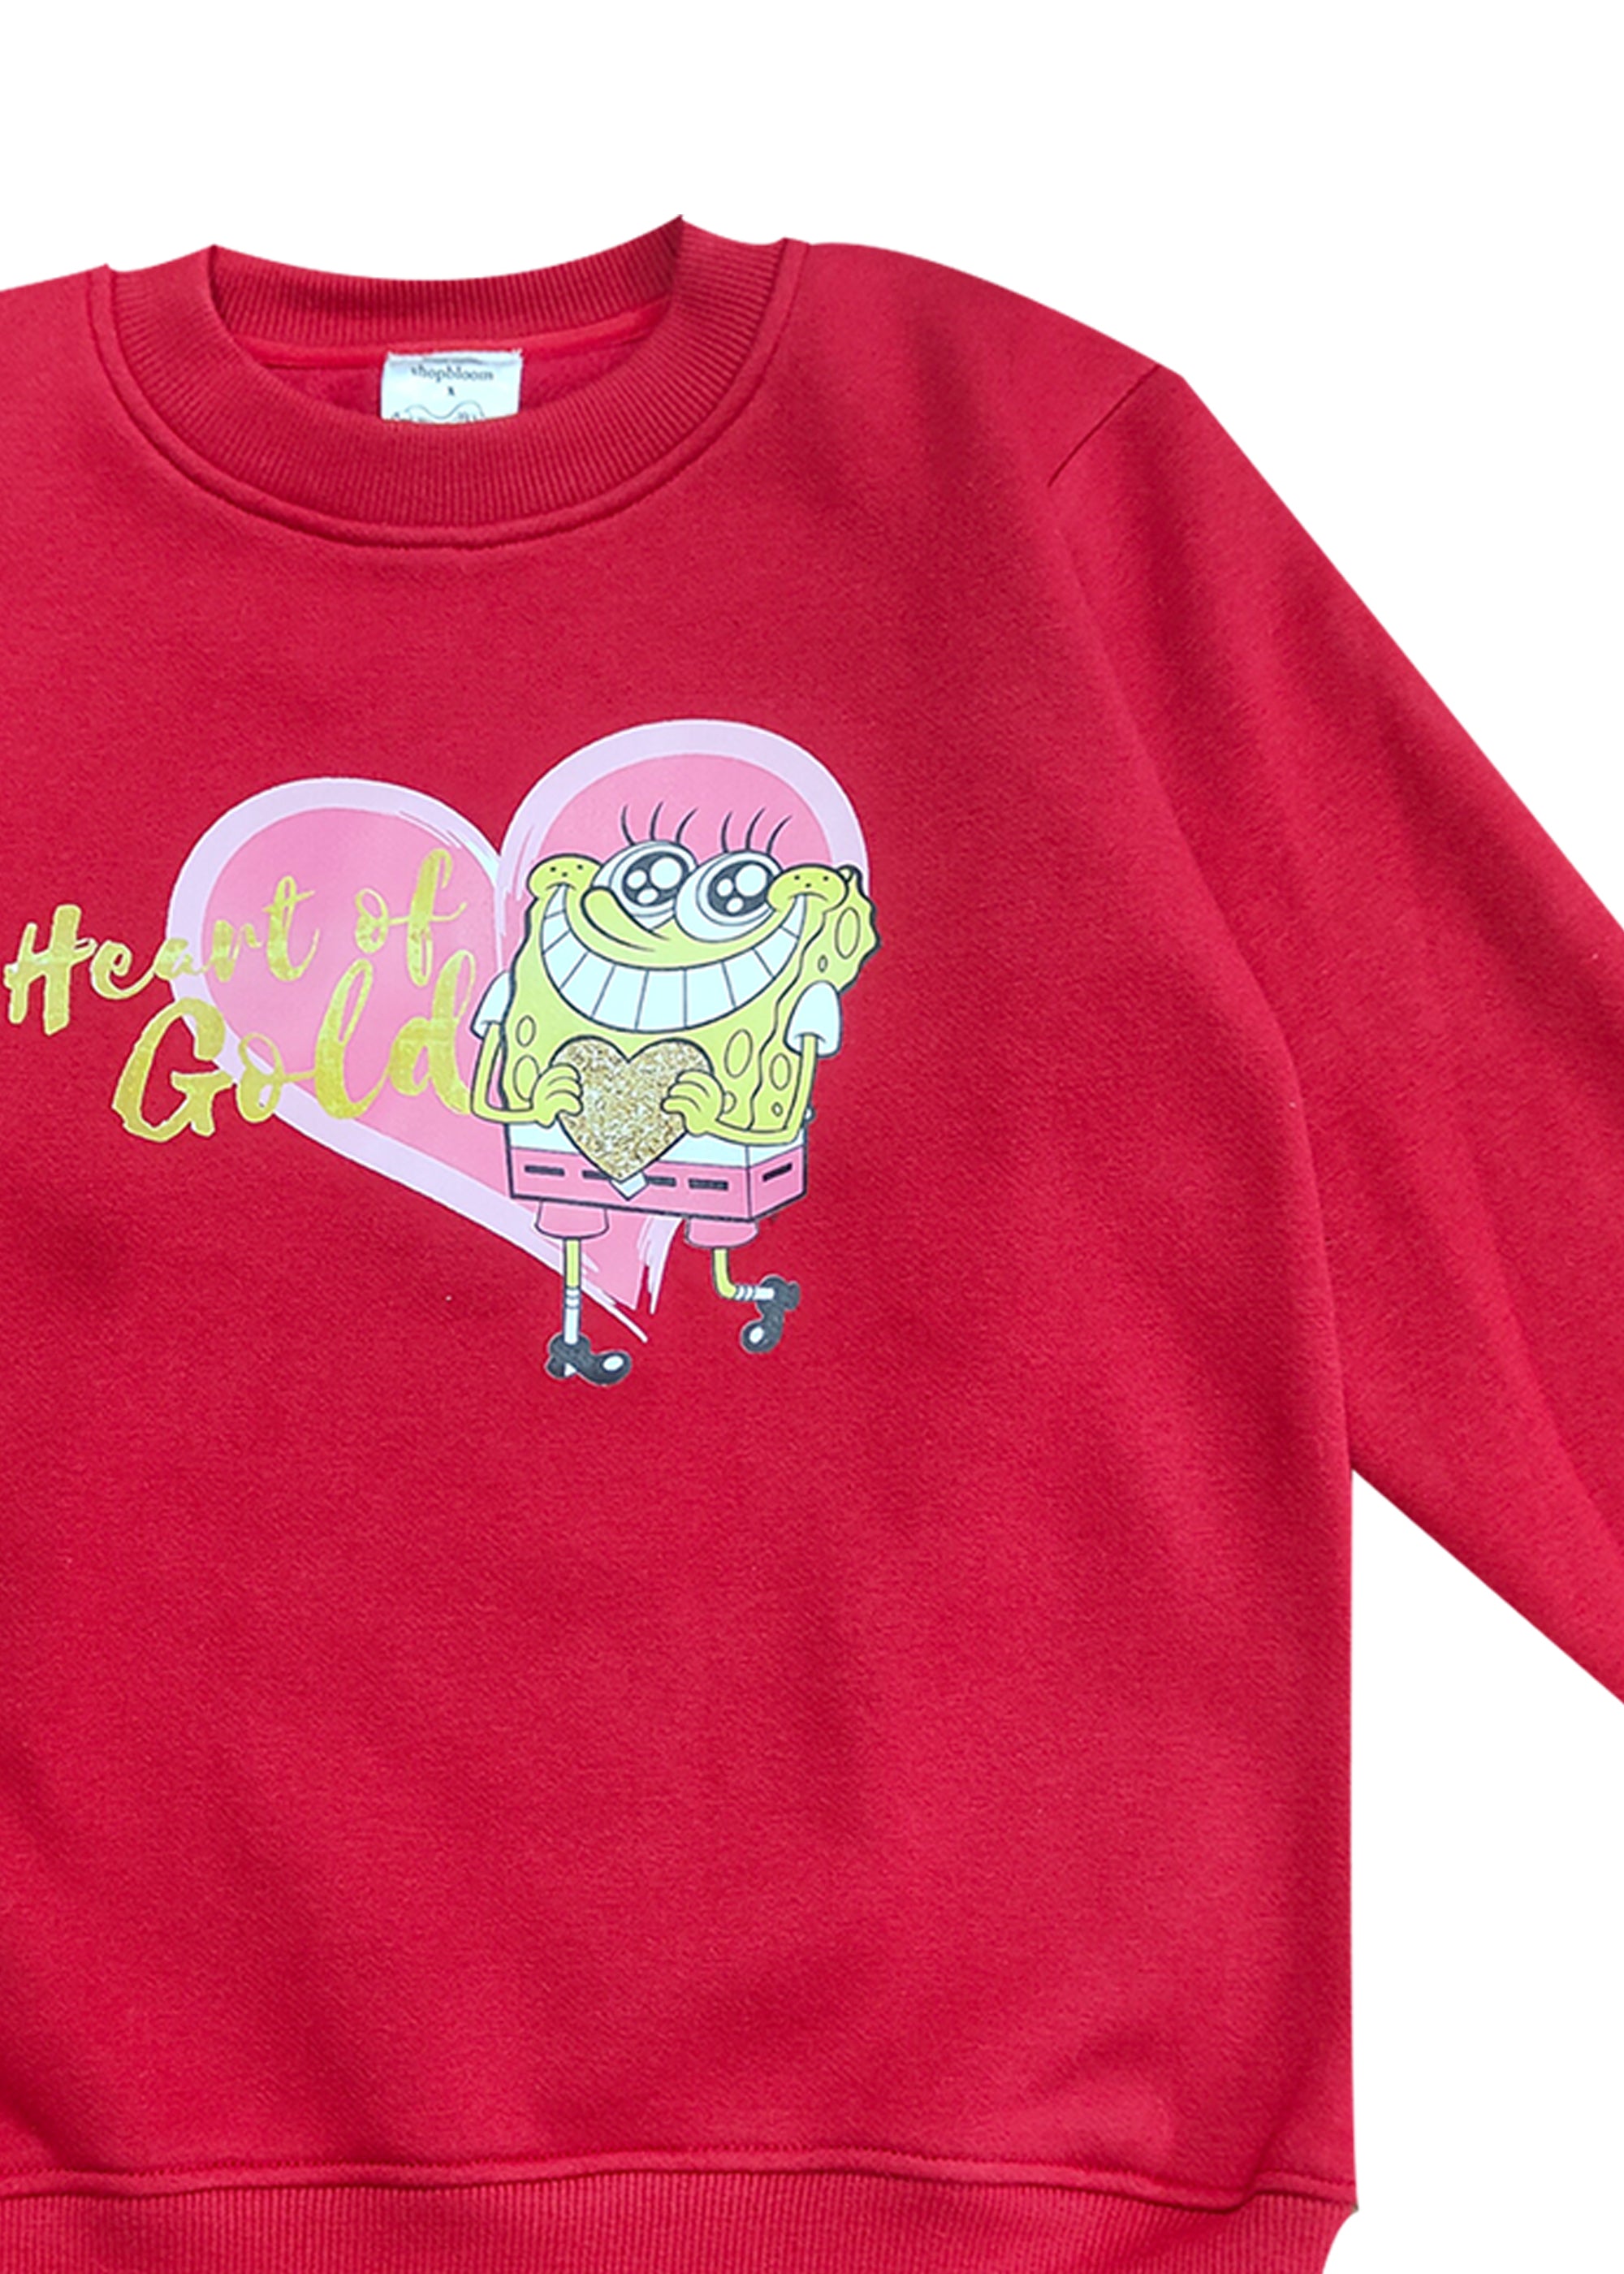 Spongebob Heart Of Gold Print Cotton Fleece Kids Sweatshirt Set - Shopbloom